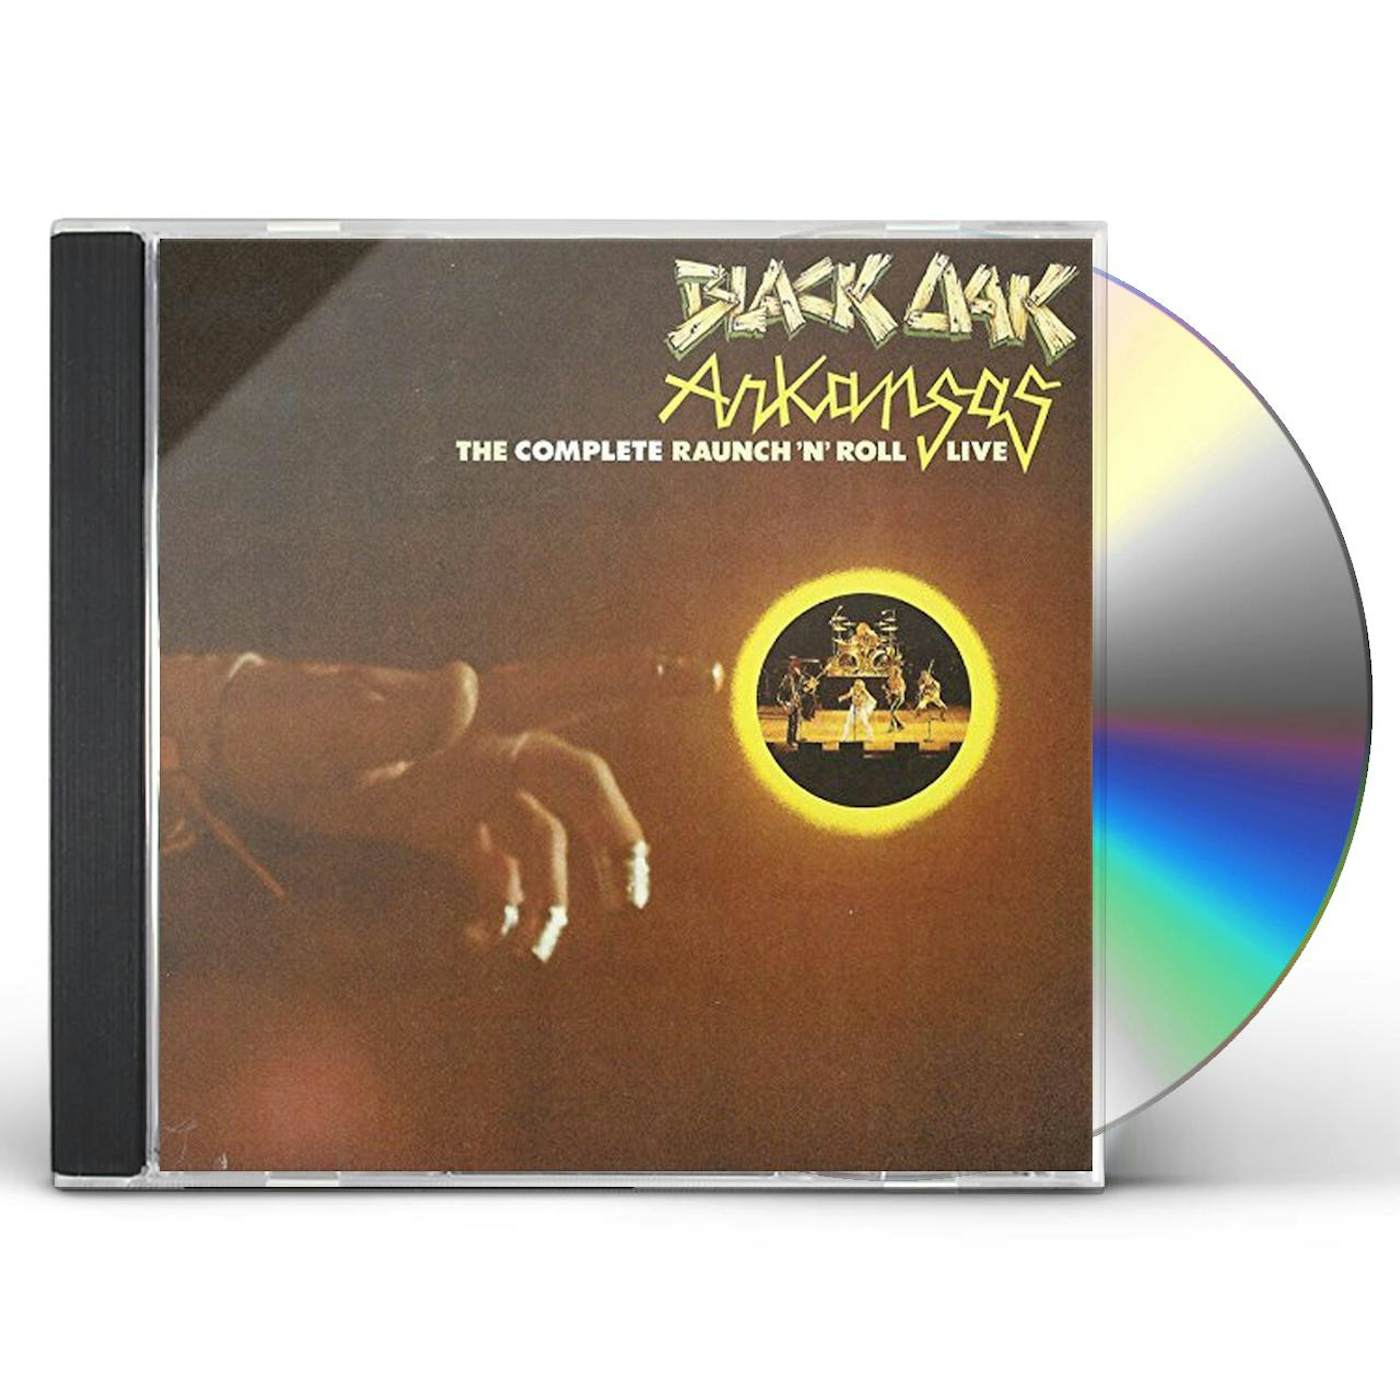 Black Oak Arkansas COMPLETE RAUNCH N ROLL LIVE CD